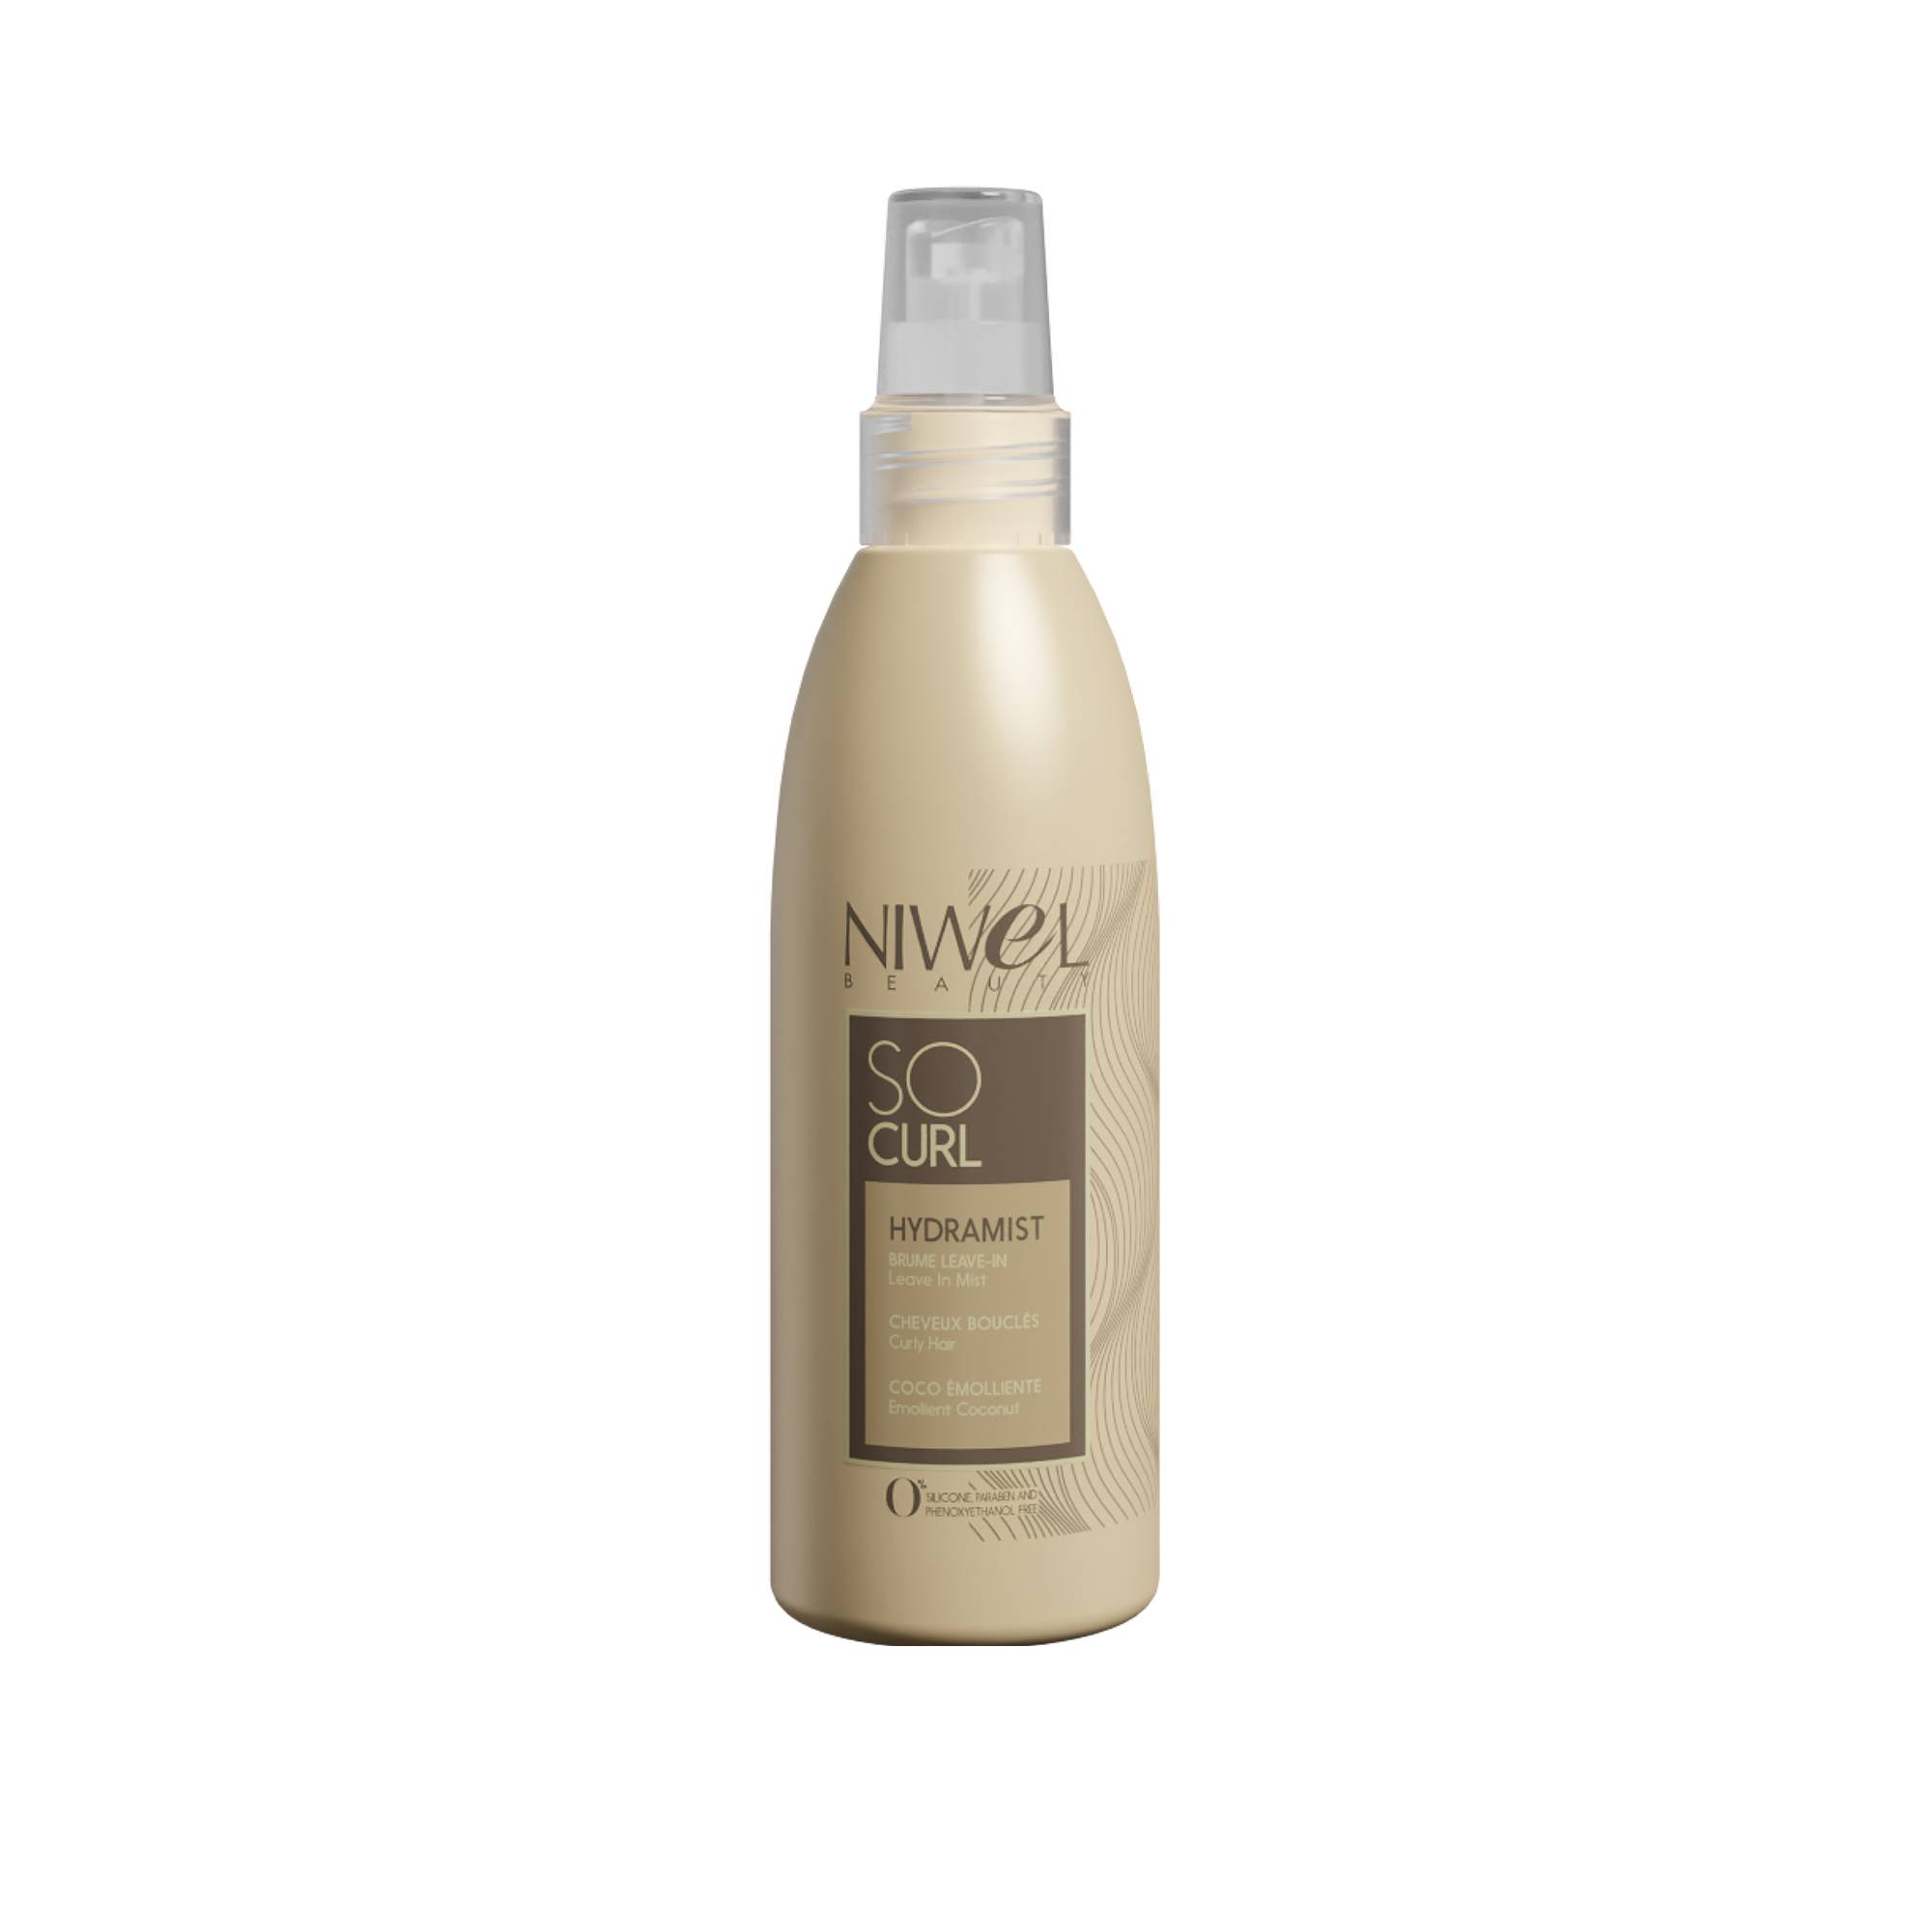 Spray hydratant sans rinçage Hydramist So Curl de la marque Niwel Beauty Contenance 200ml - 1